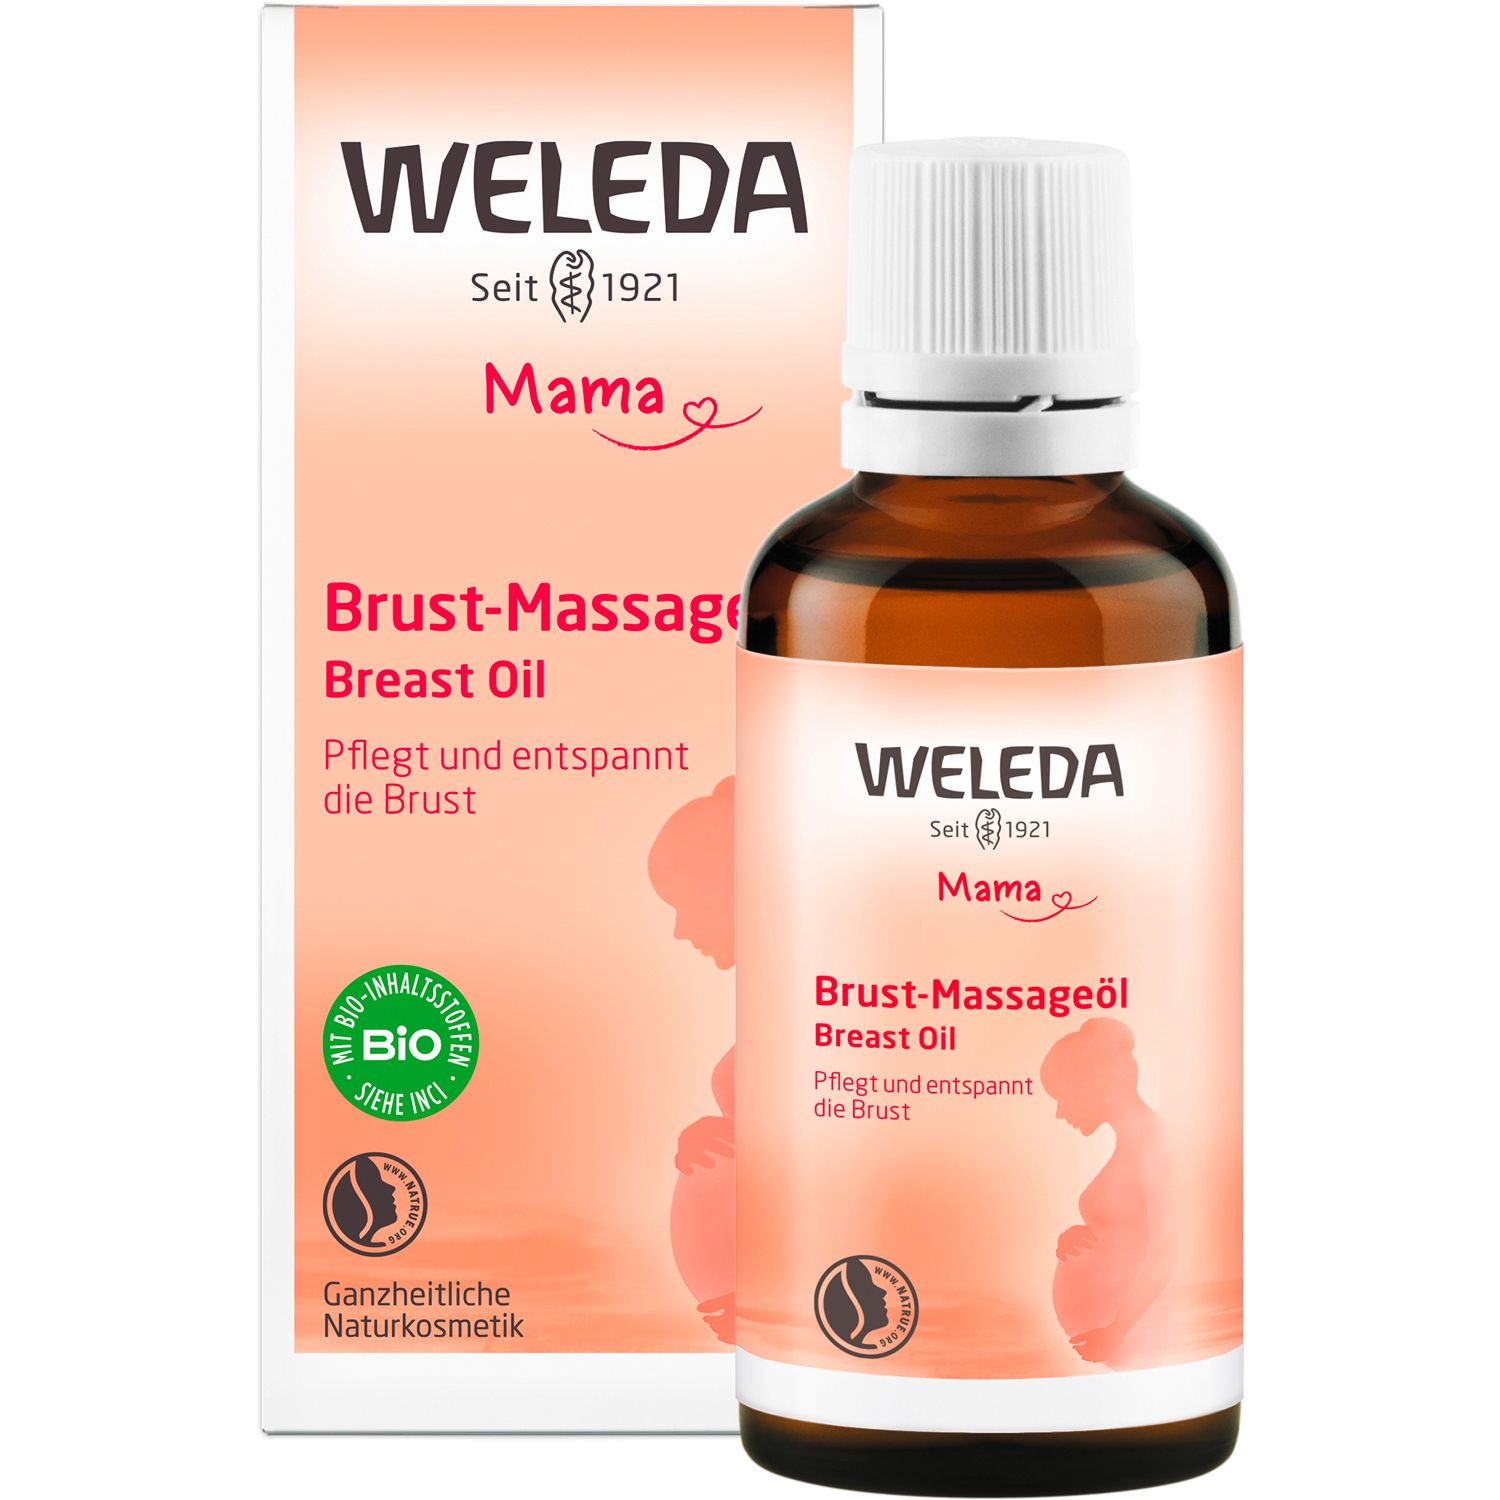 Image of Weleda Brust-Massageöl